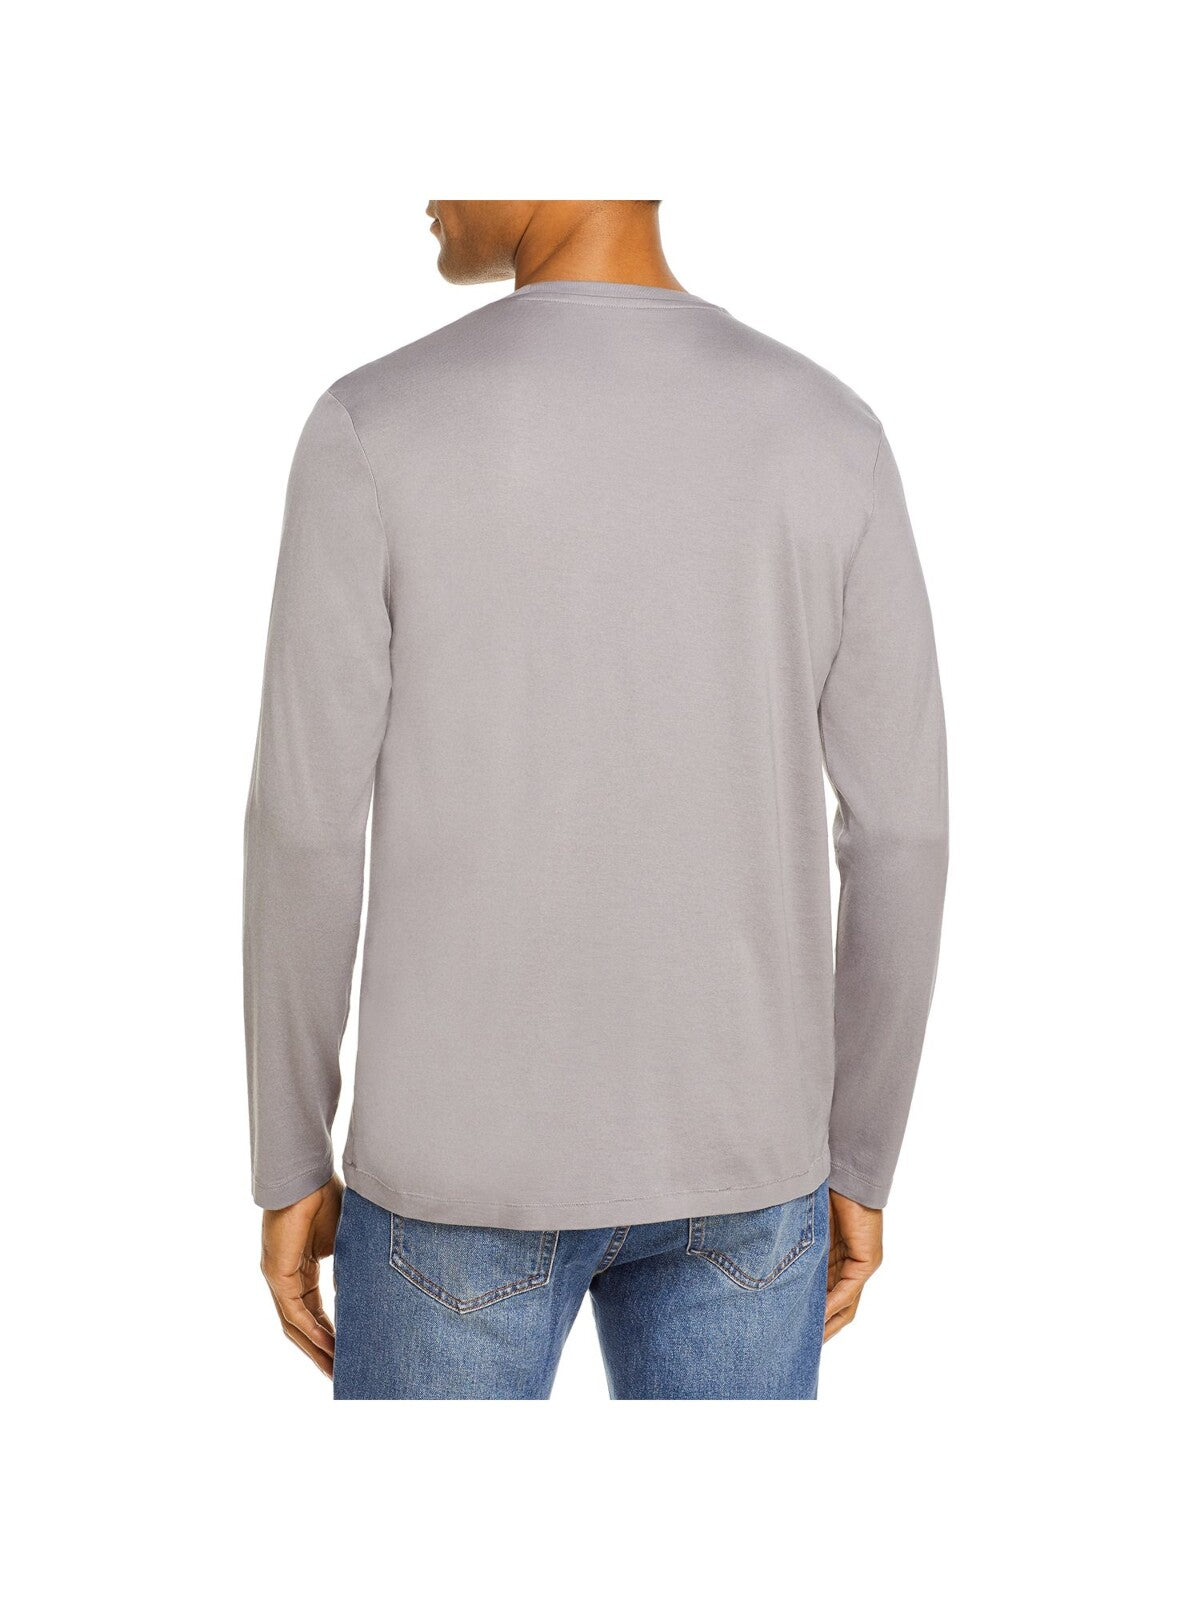 THE MENS STORE Mens Gray Pima Cotton T-Shirt XL